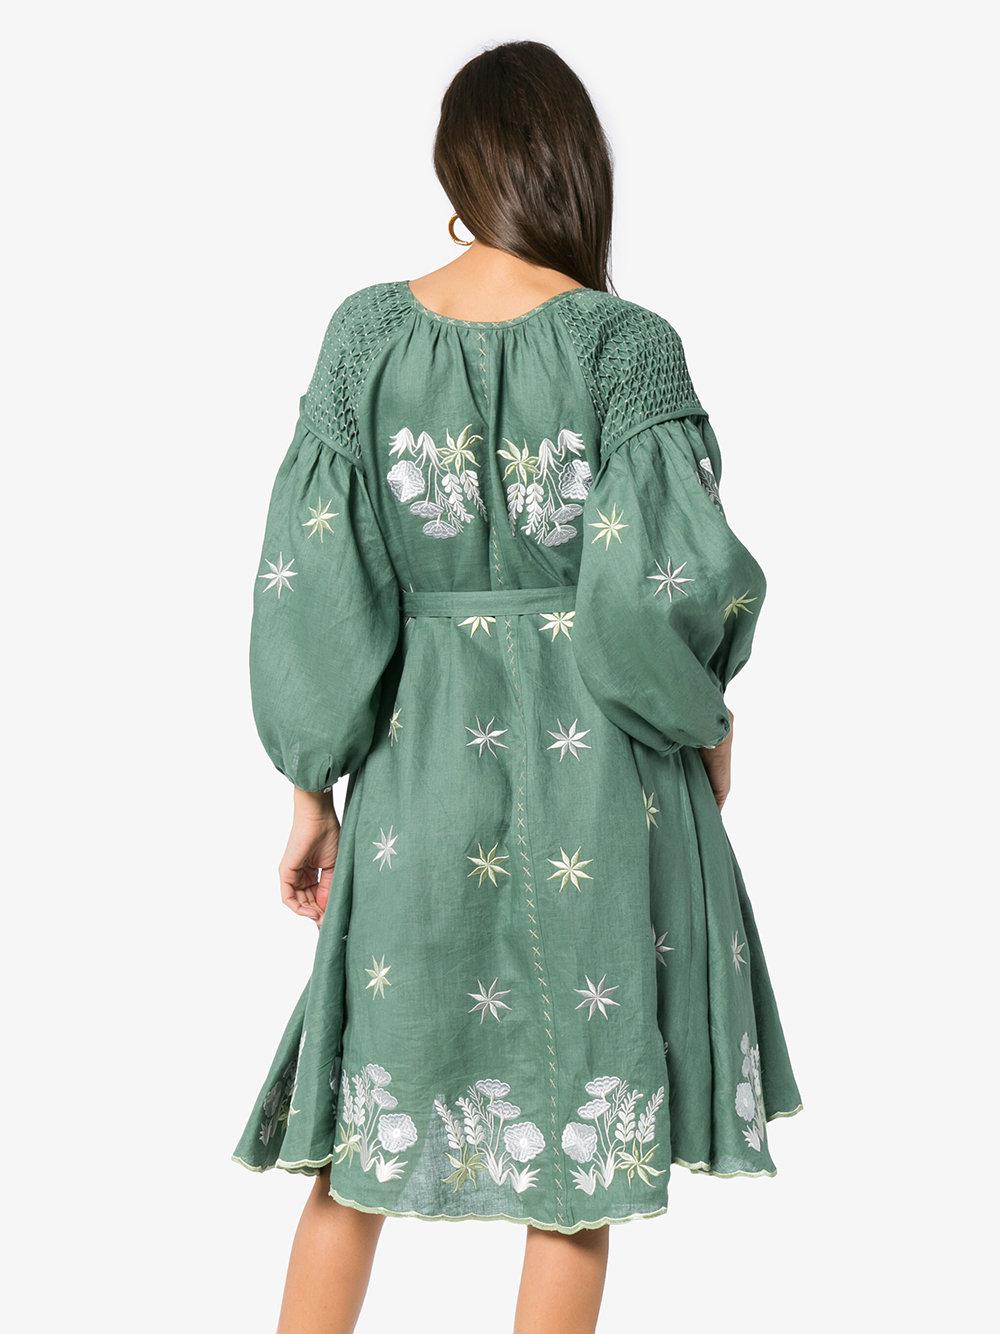 Innika Choo Hugh Jesmok Midi Smock Dress in Green - Lyst